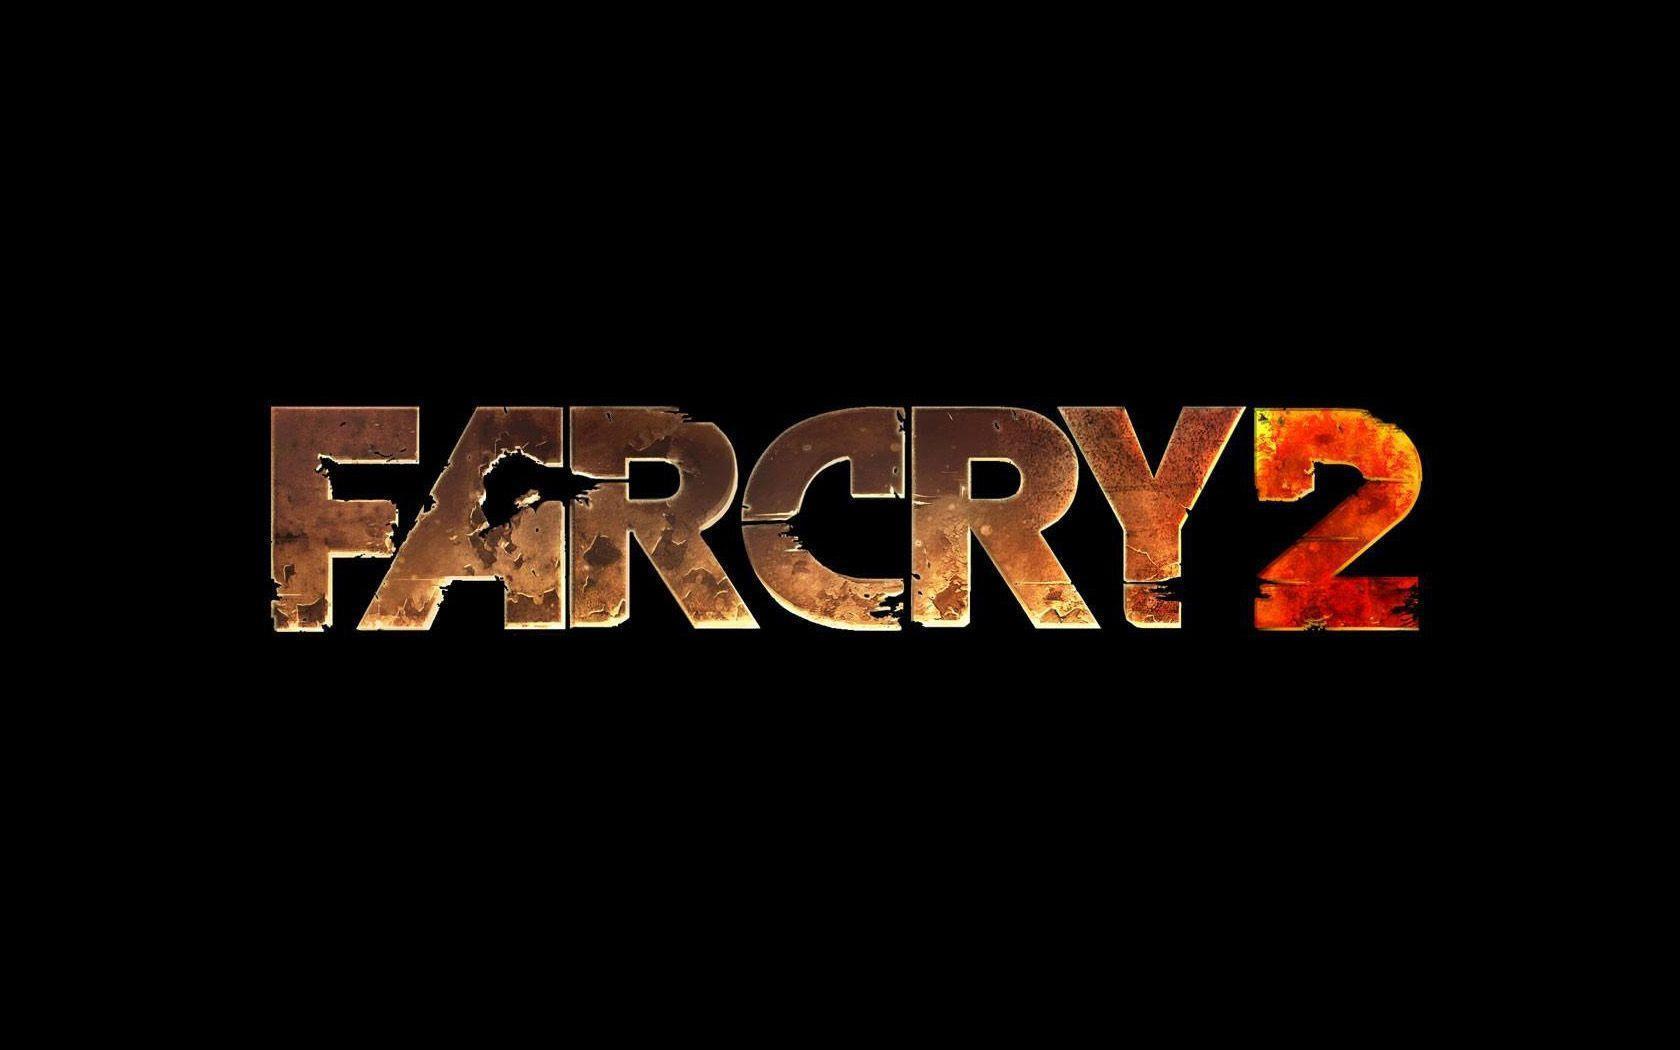 Far Cry 2 Fortunes Edition